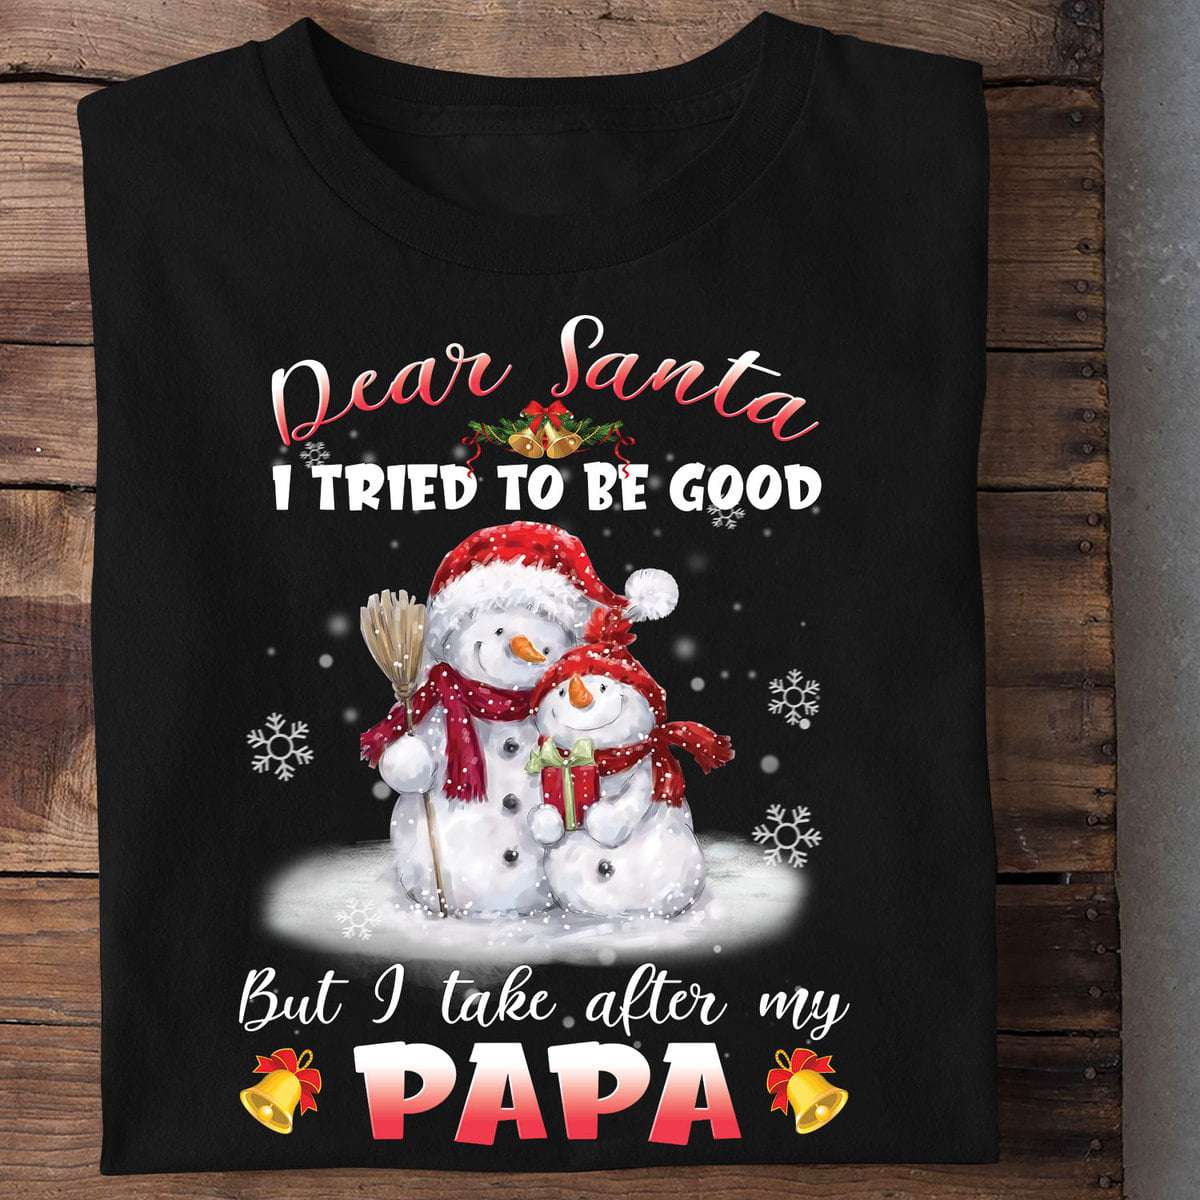 Dear Santa I tried to be goold but I take after my Papa - Papa grandpa T-shirt, Christmas snowman